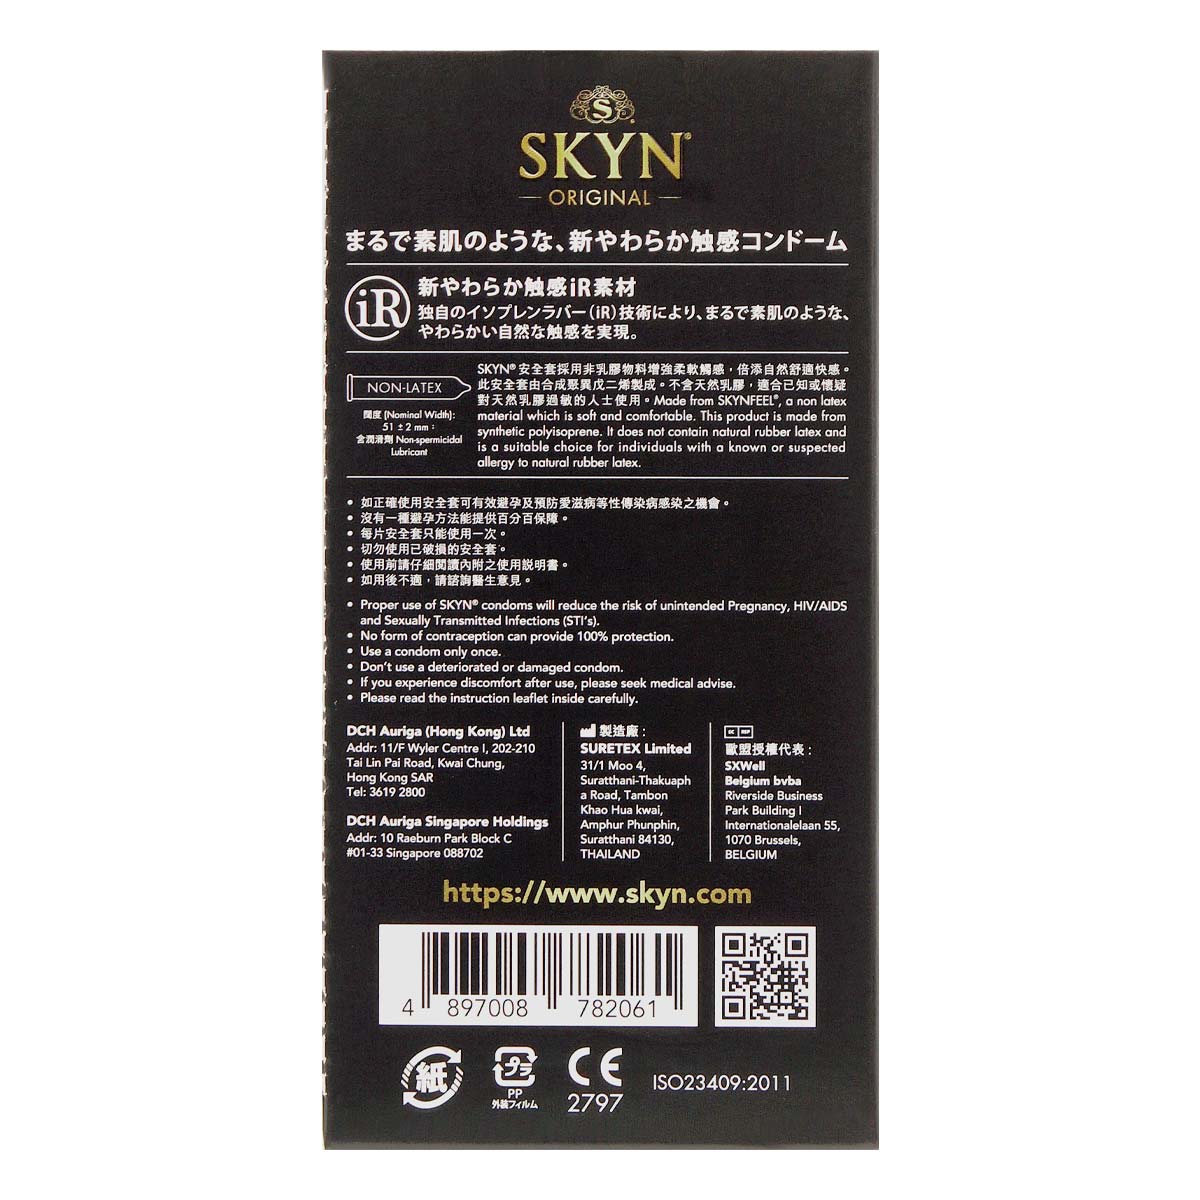 SKYN Original 10's Pack iR Condom-p_3